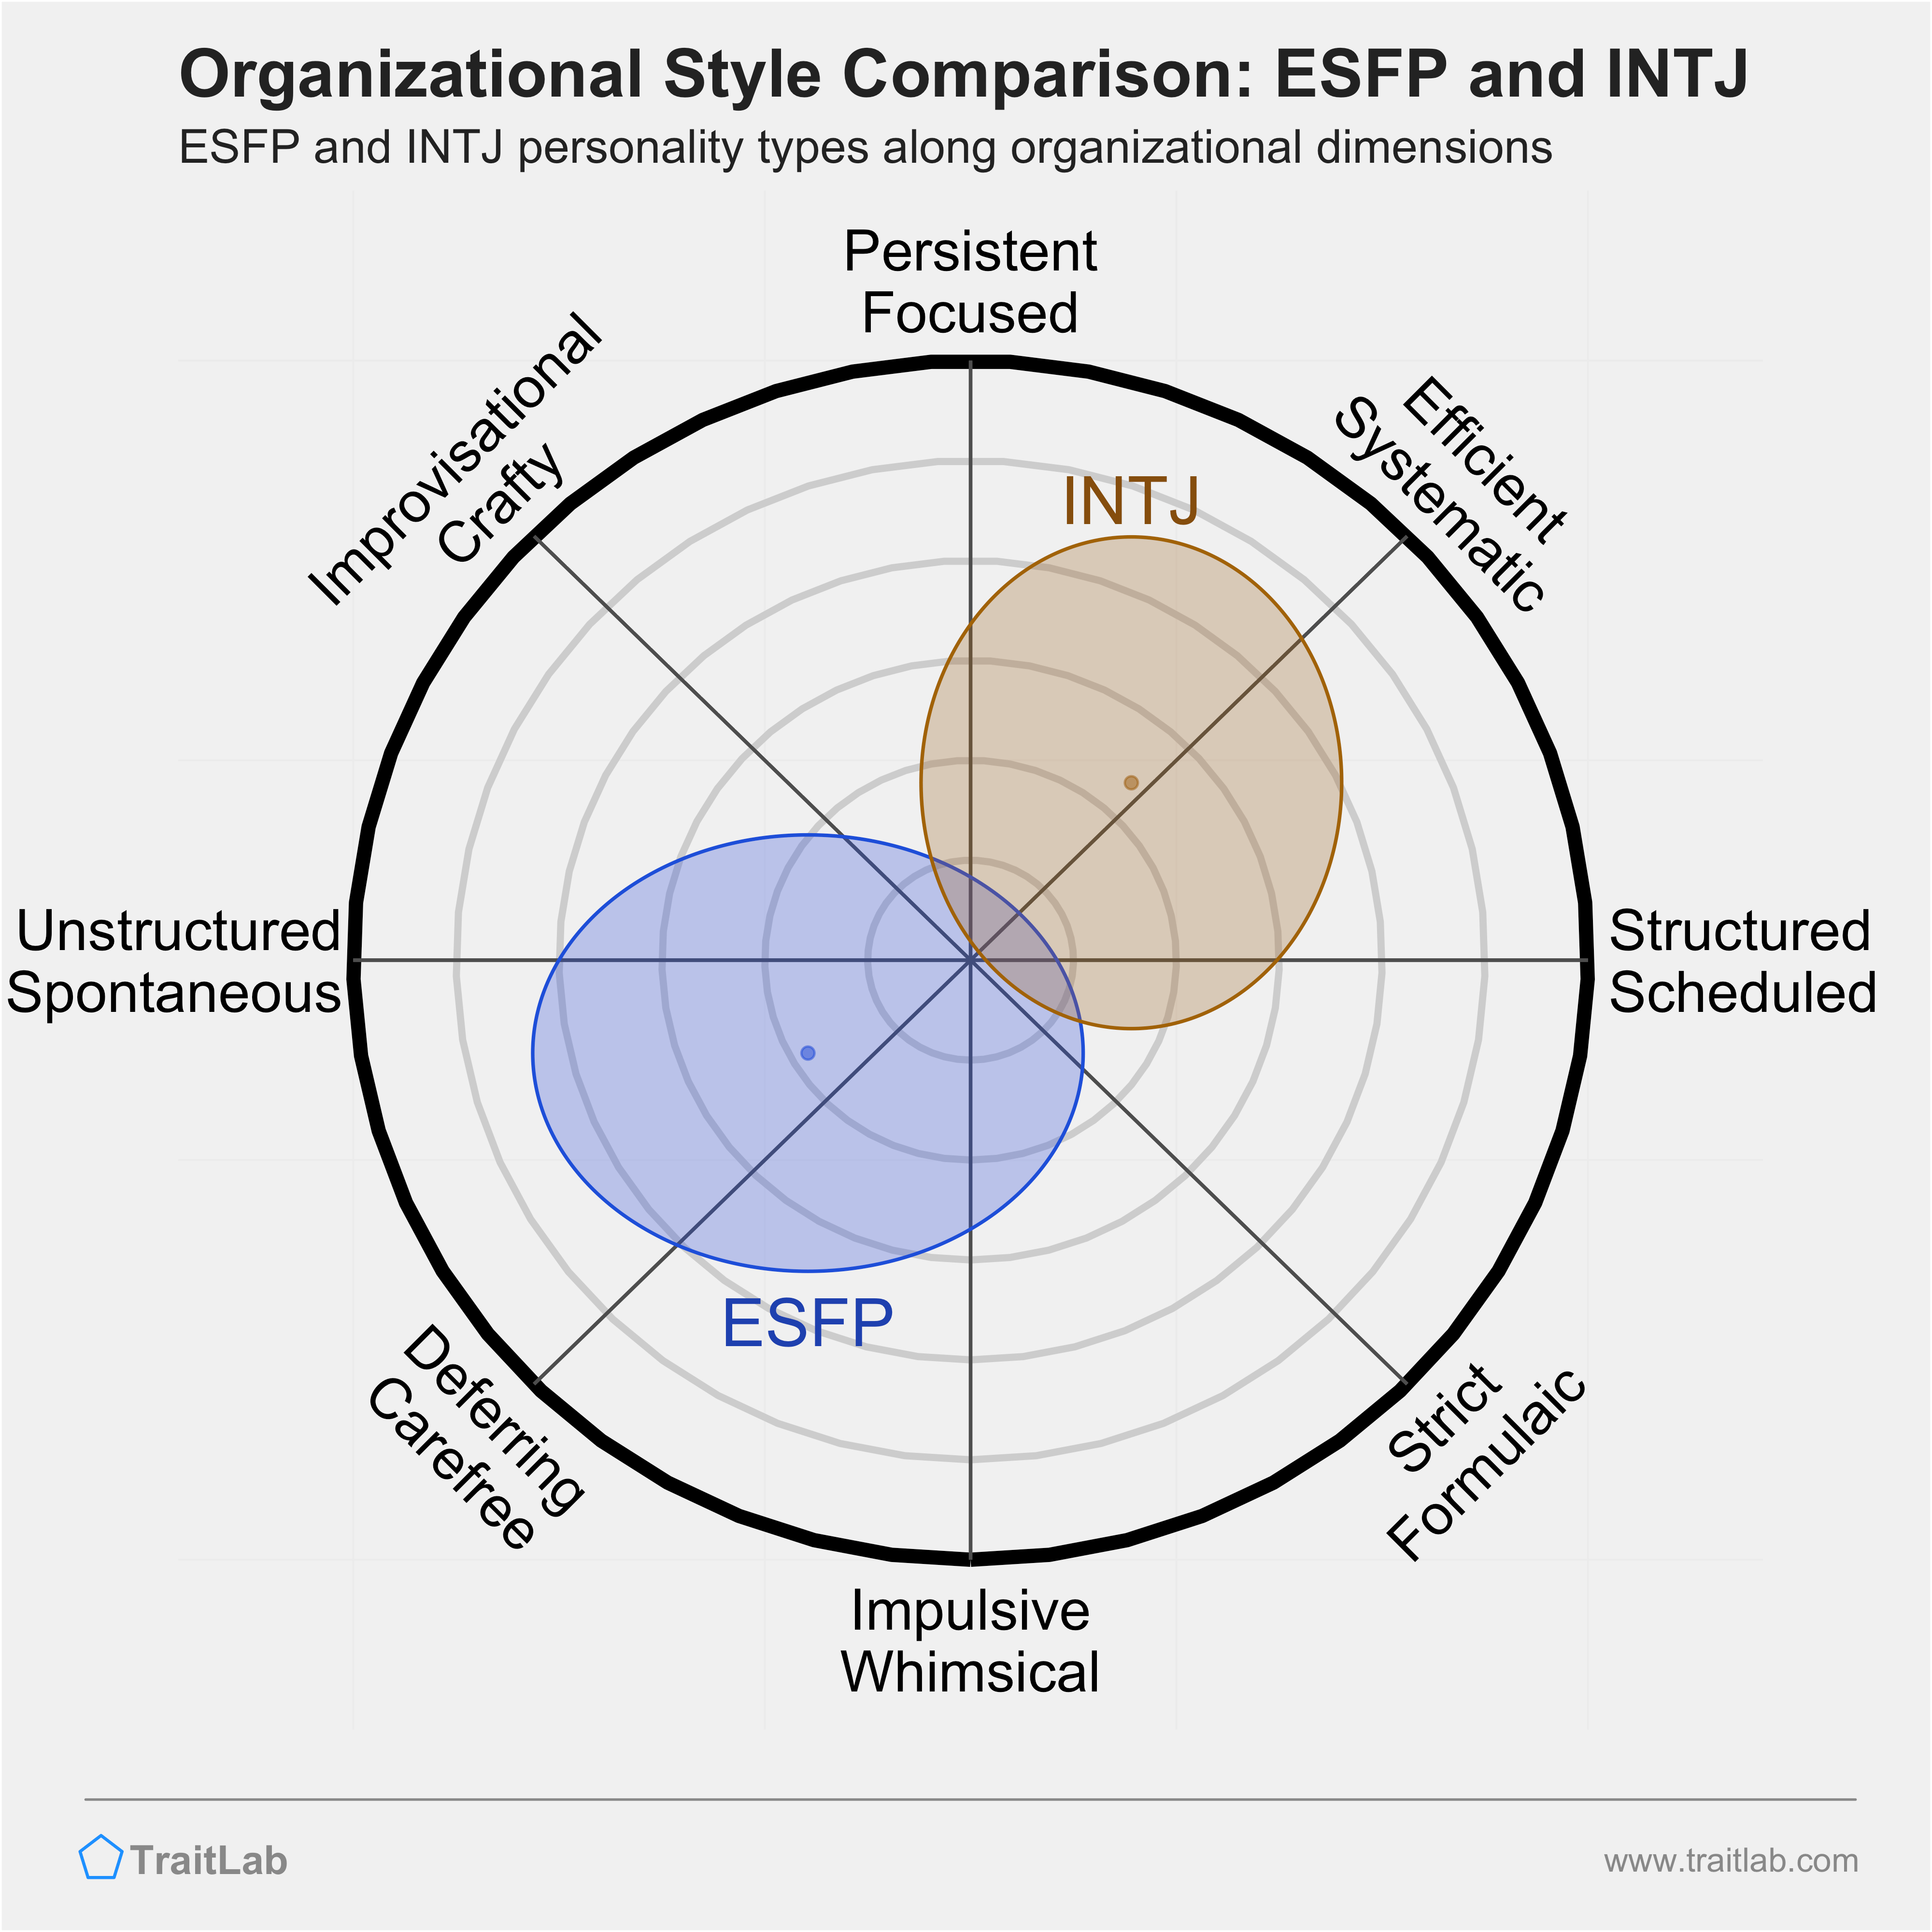 ESFP and INTJ comparison across organizational dimensions